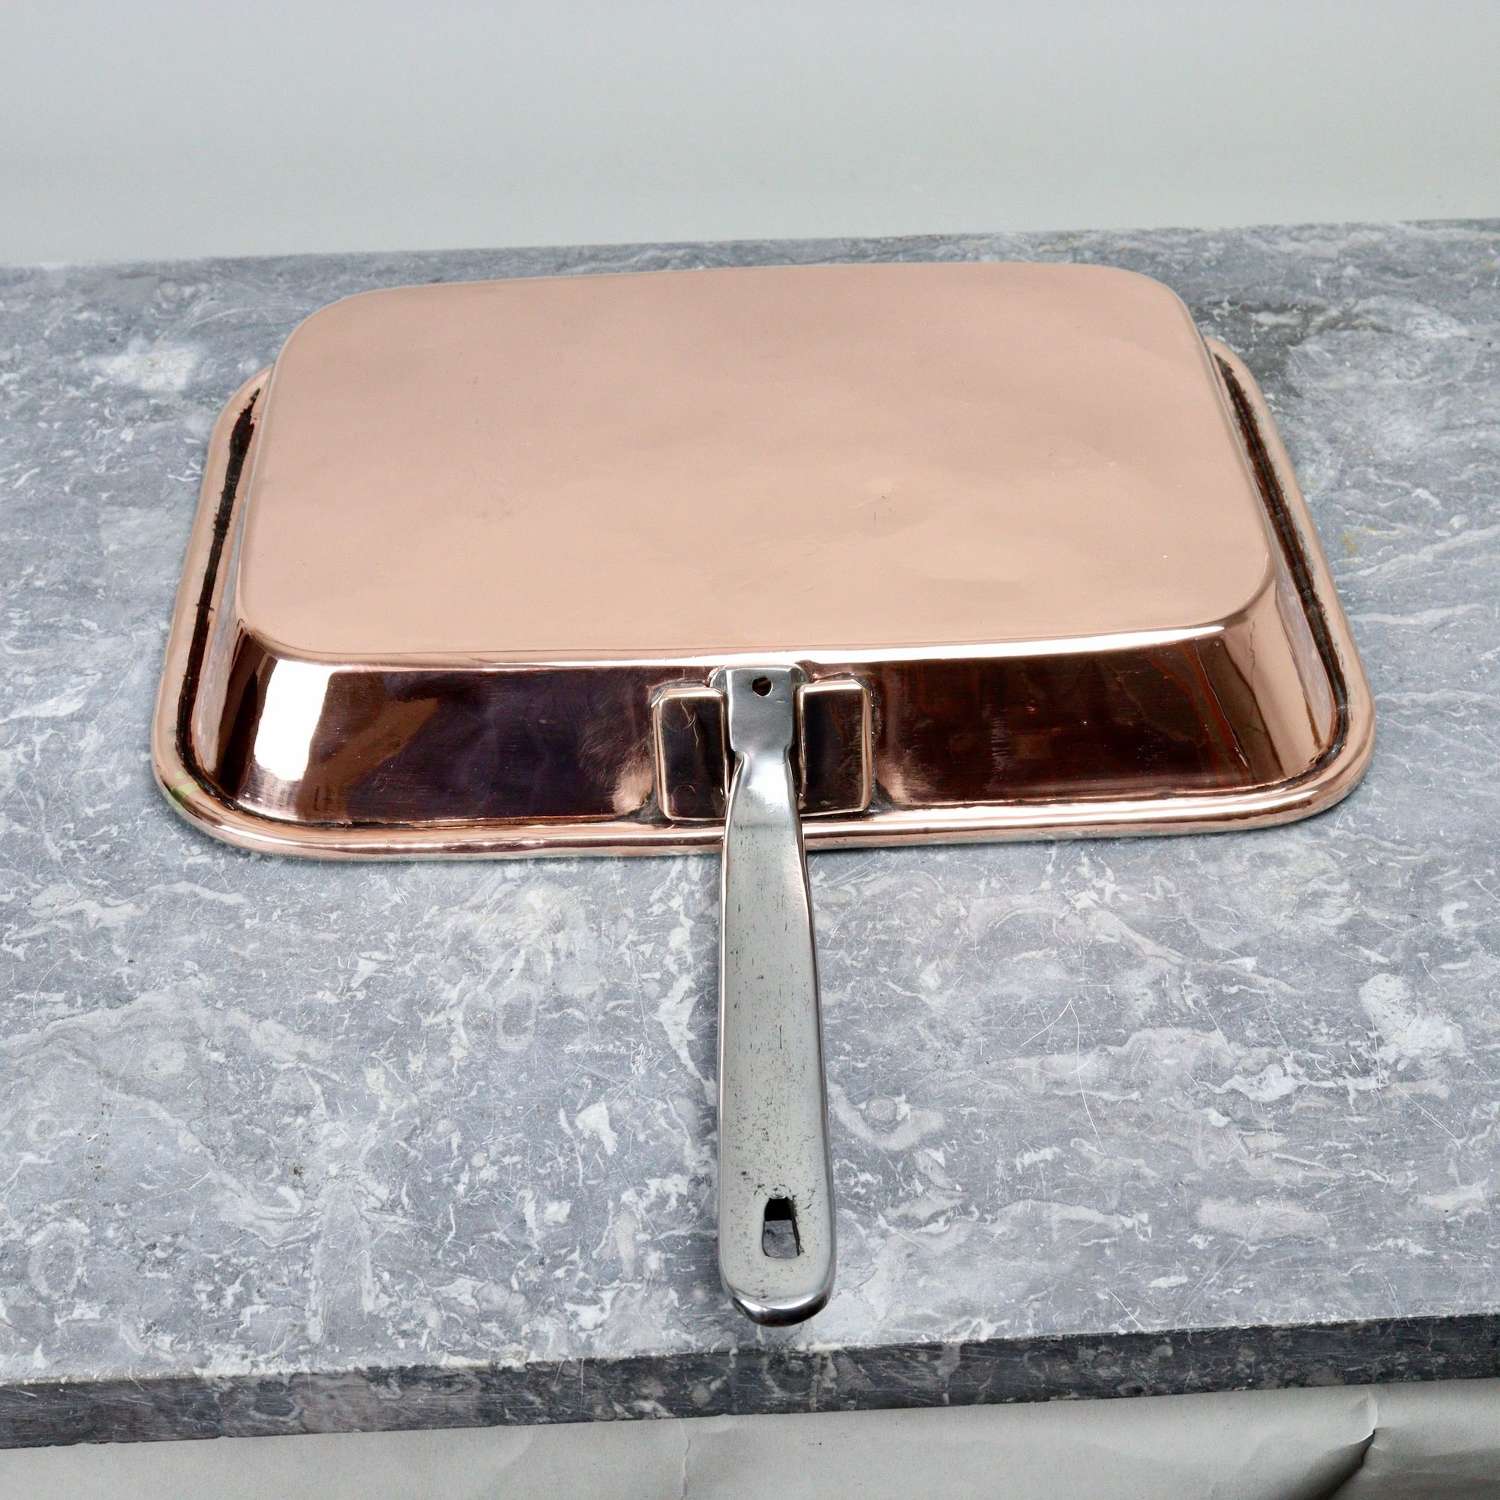 Unusual copper baking dish